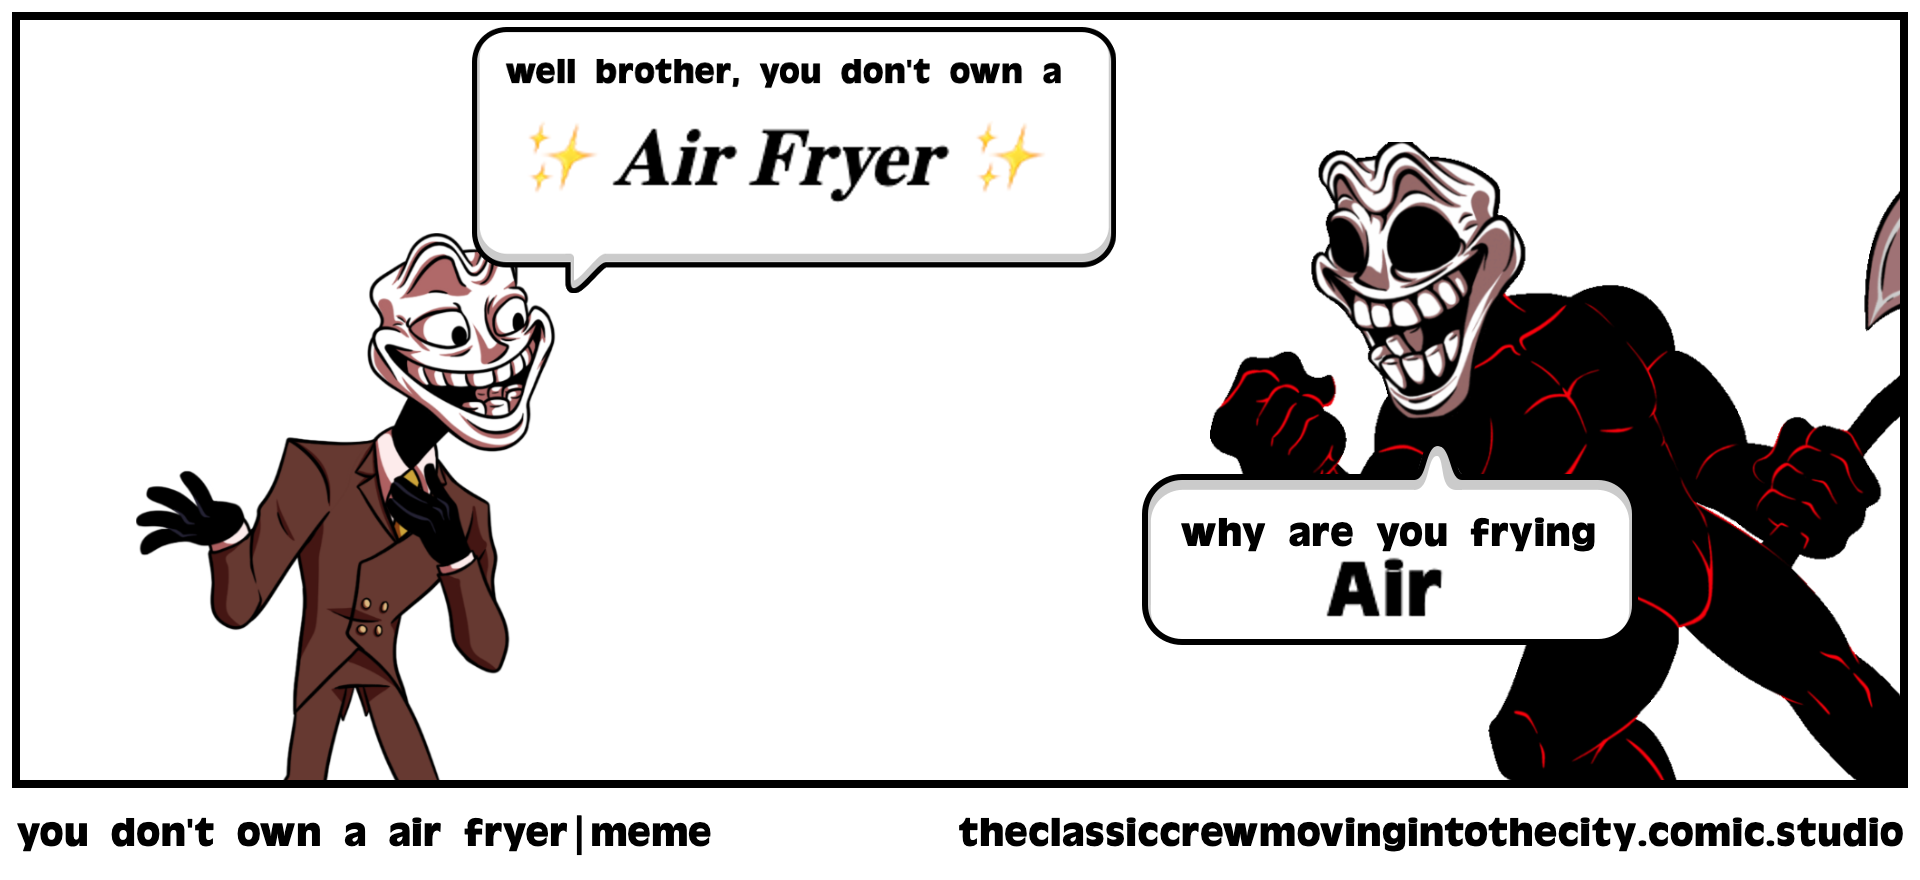 you don't own a air fryer|meme